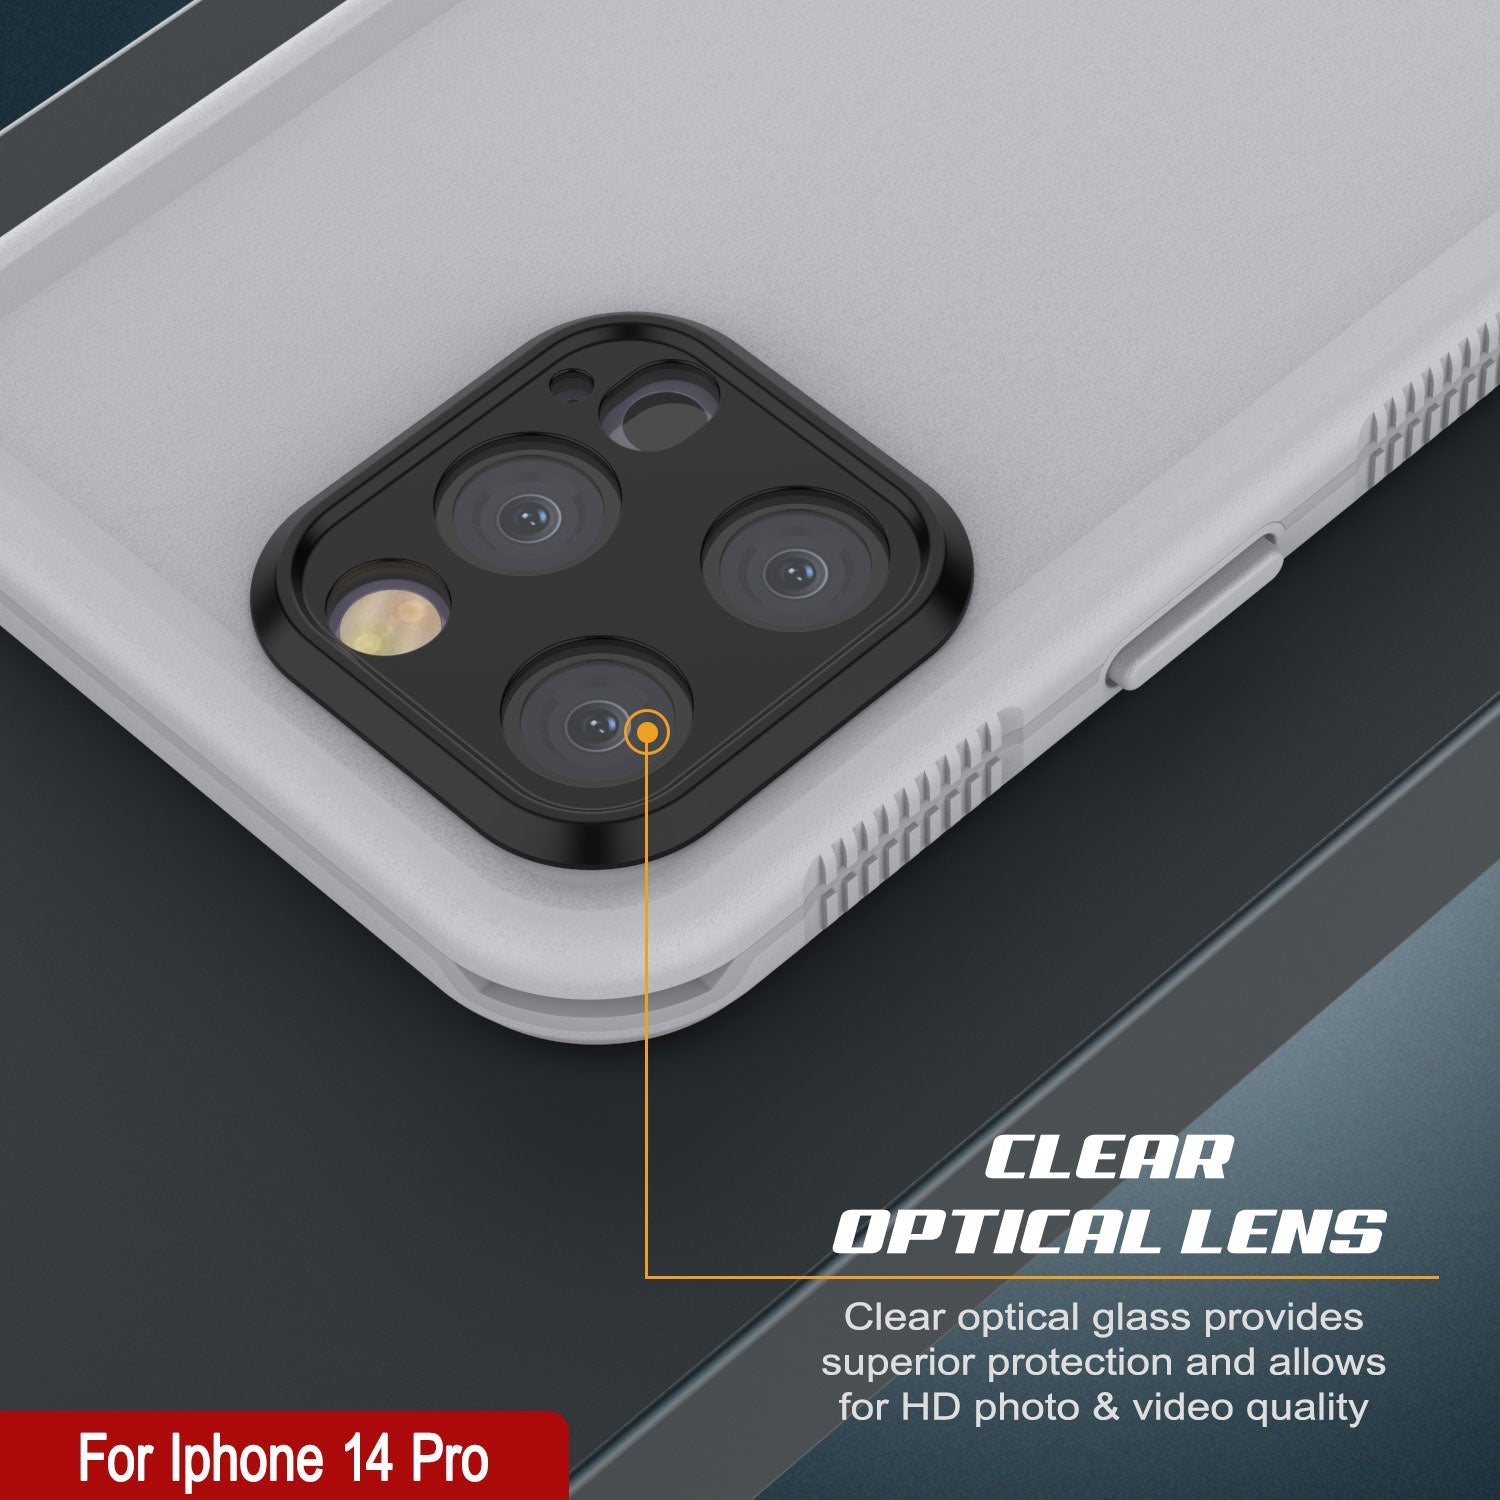 Punkcase iPhone 14 Pro Waterproof Case [Aqua Series] Armor Cover [White]